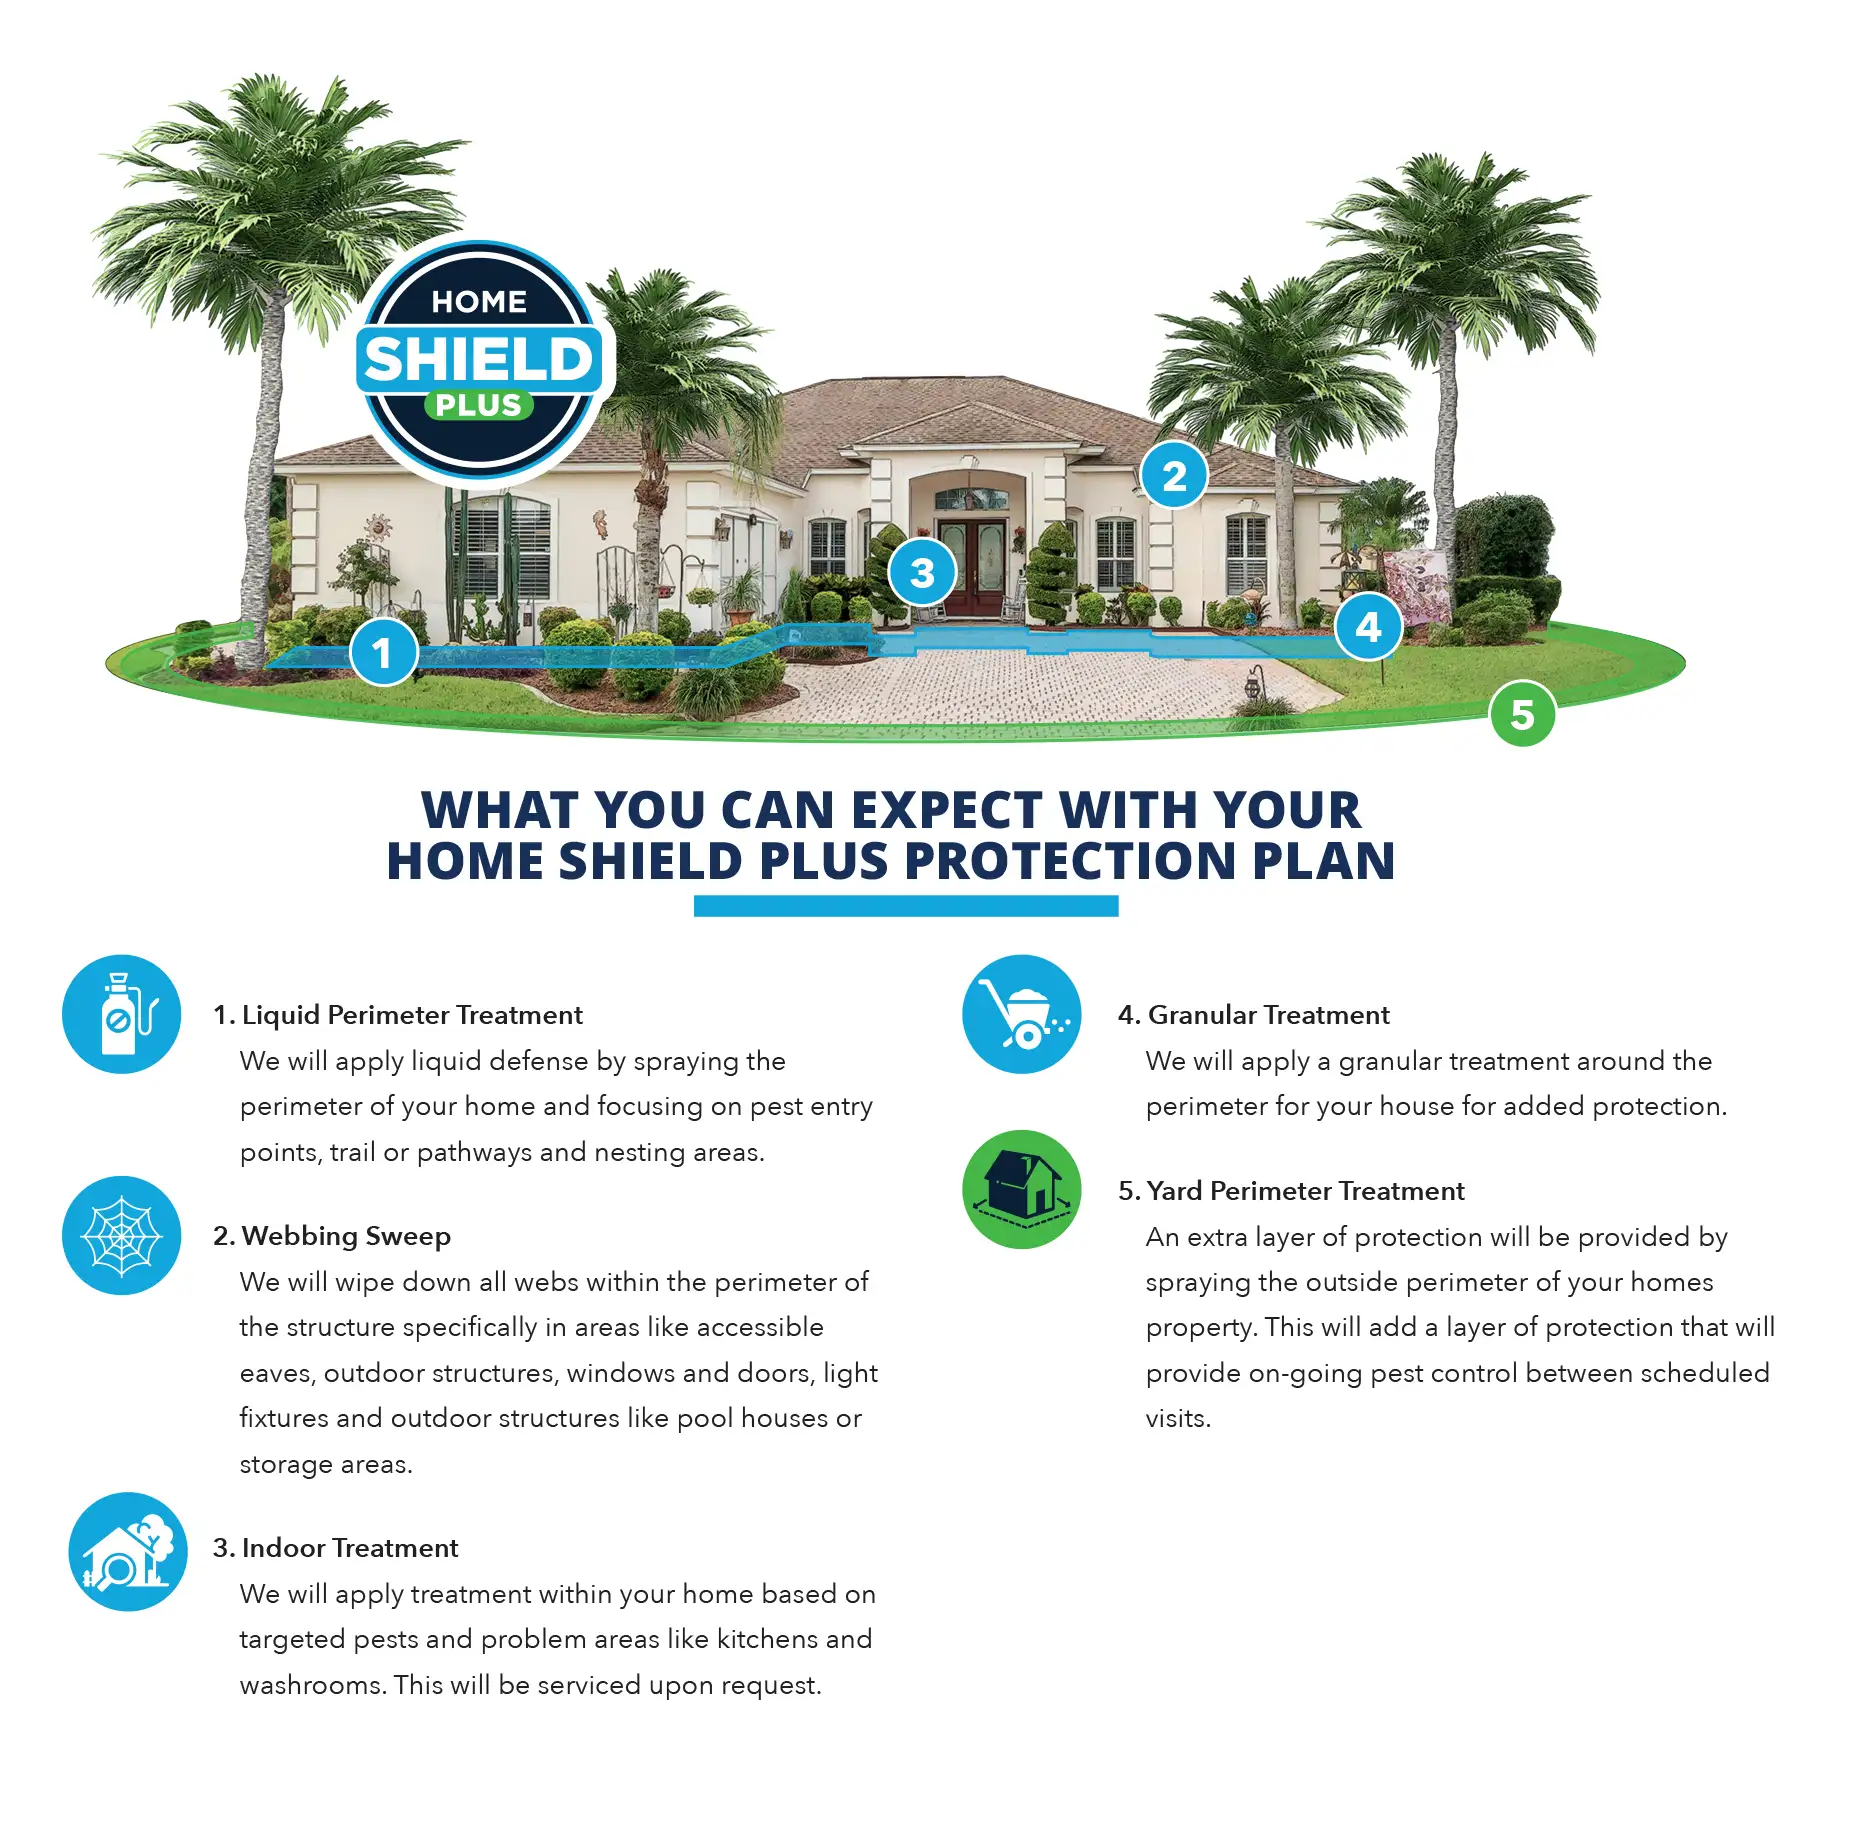 Blue Door Pest Control Home Shield Plus Protection Plan